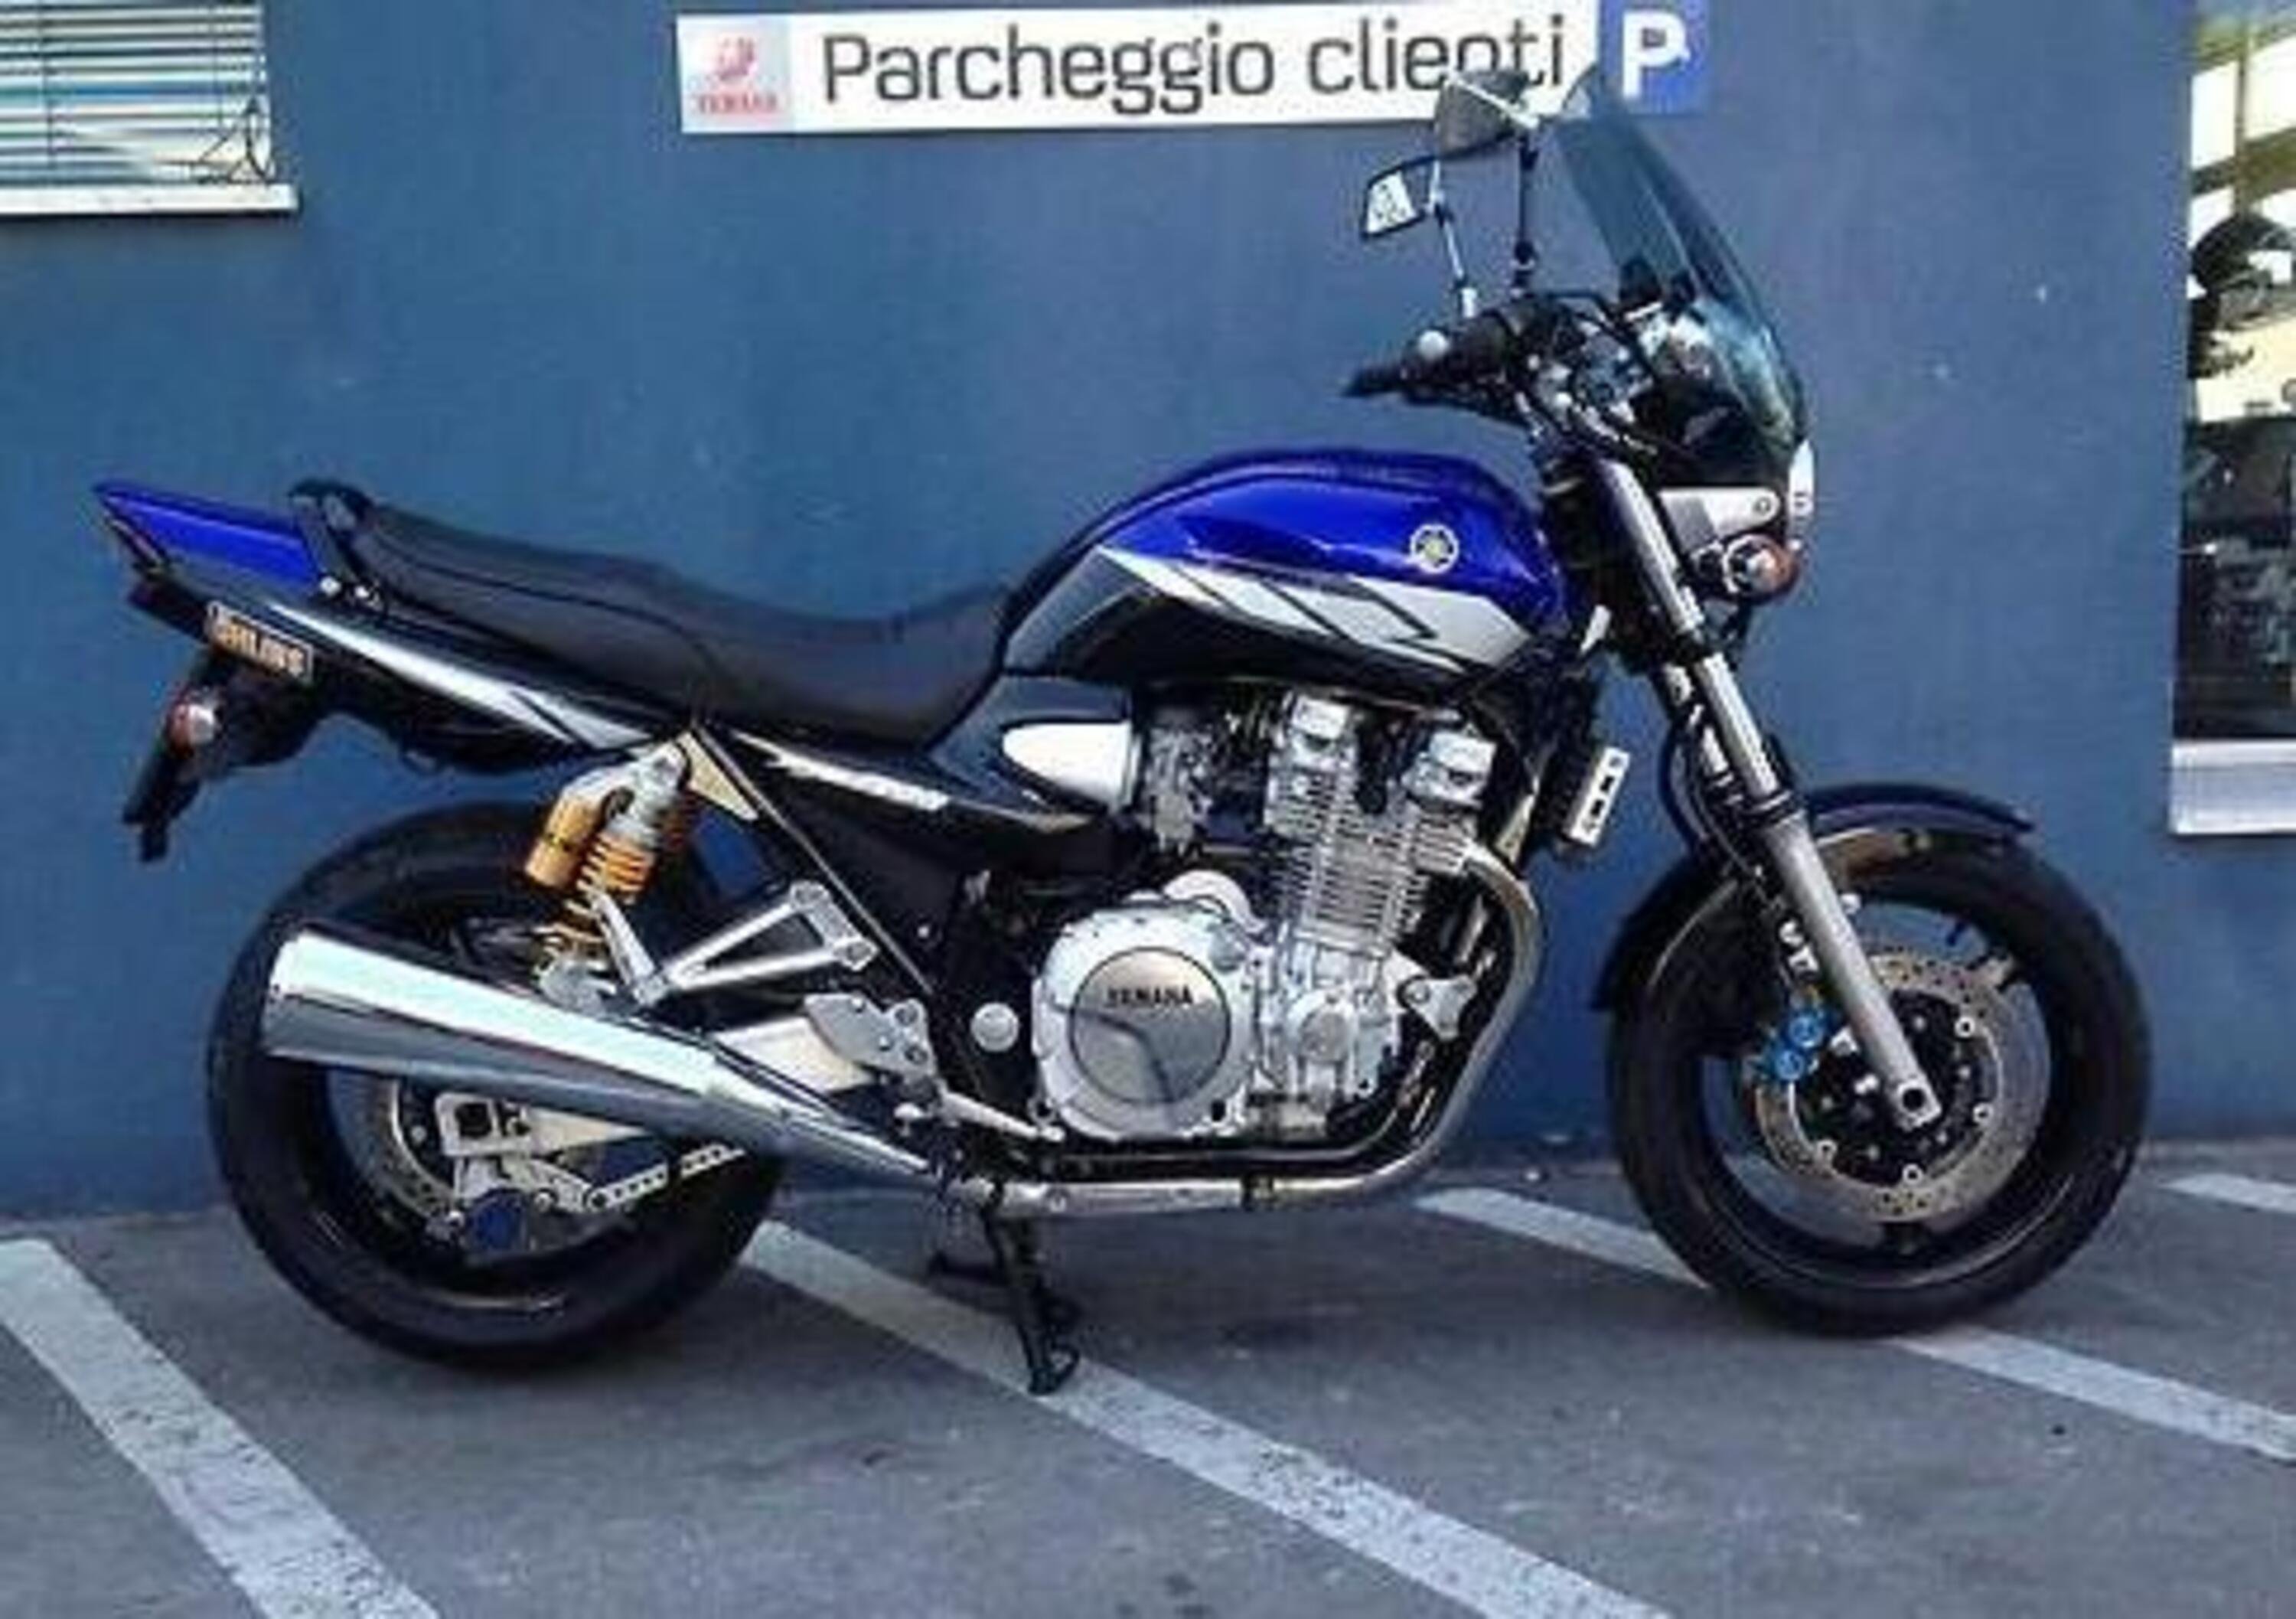 Le Belle e possibili di Moto.it: Yamaha XJR 1300